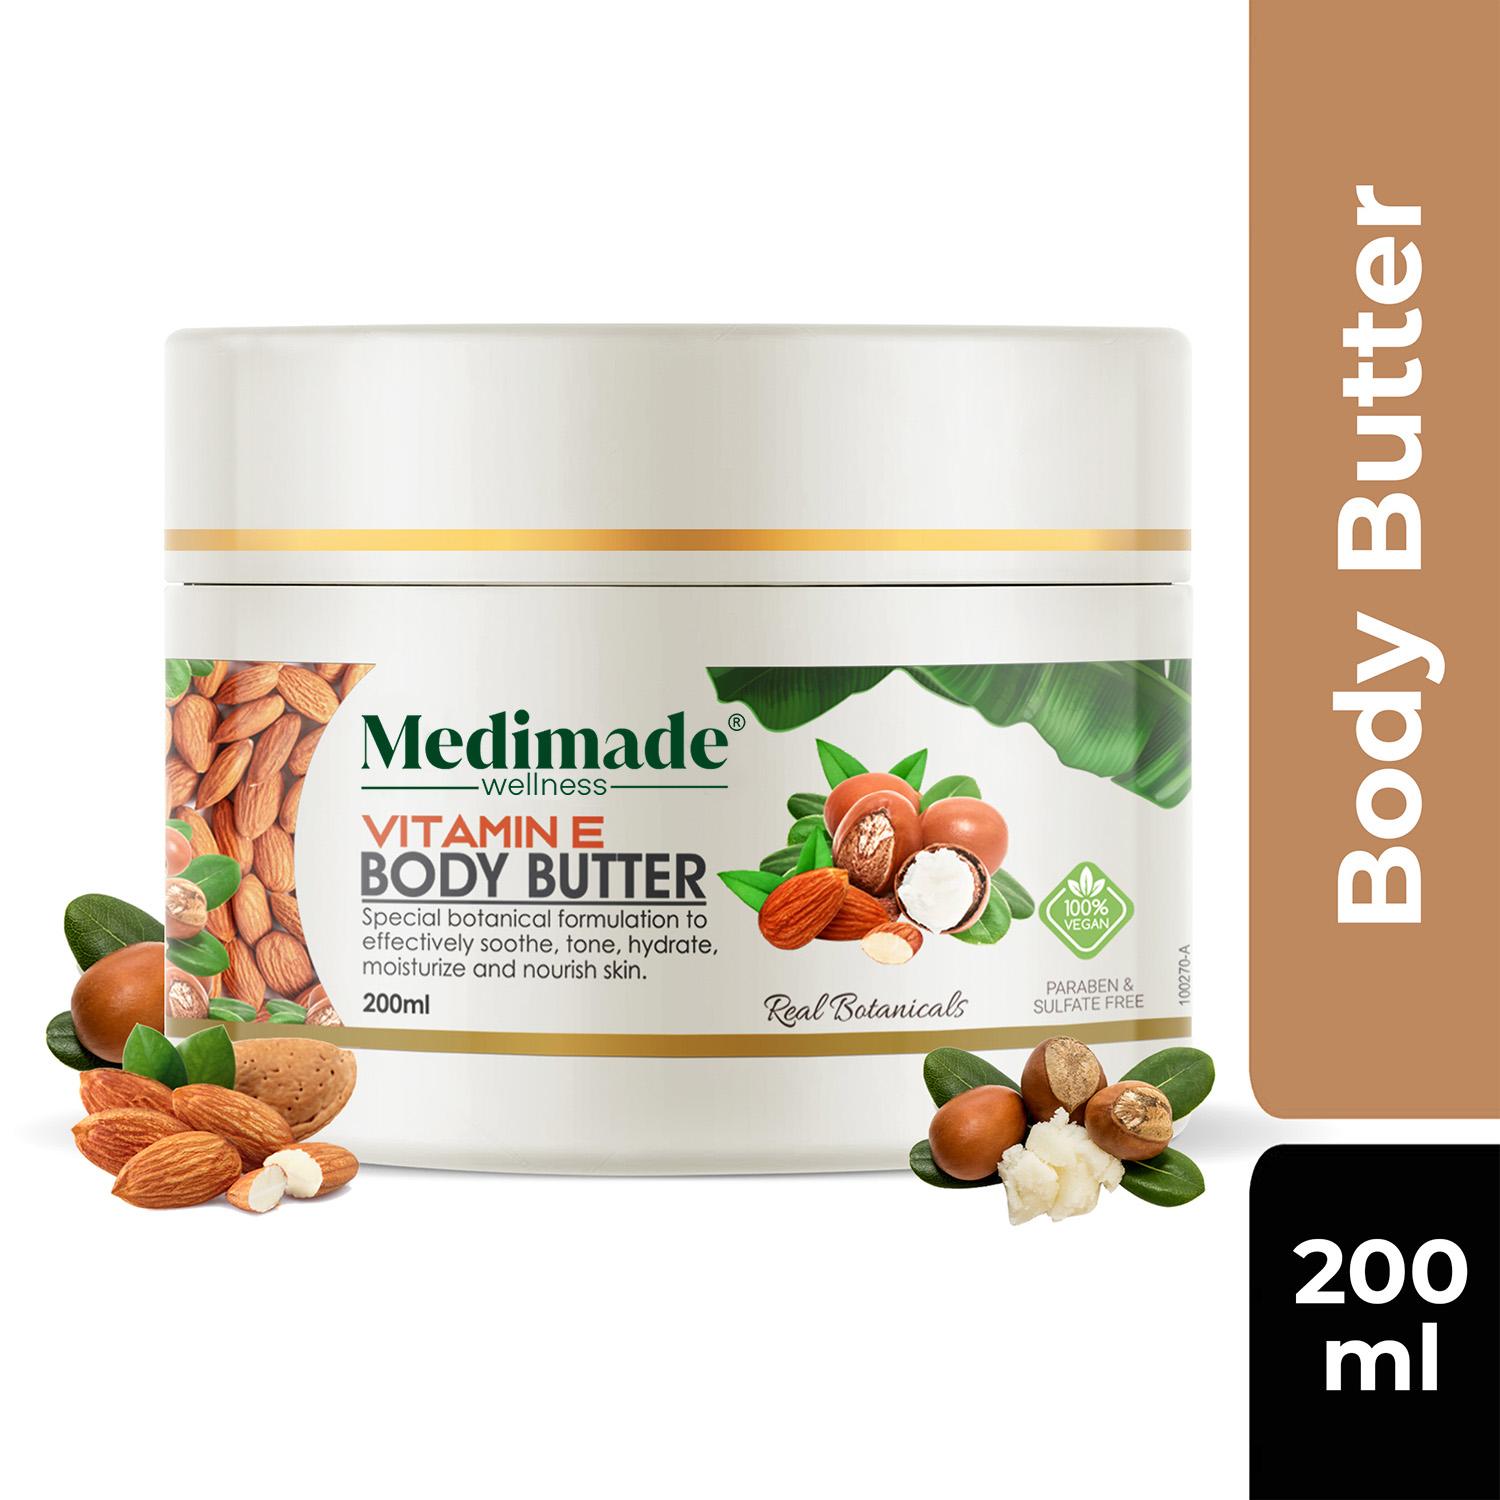 Medimade Vitamin E Body Butter (200ml)